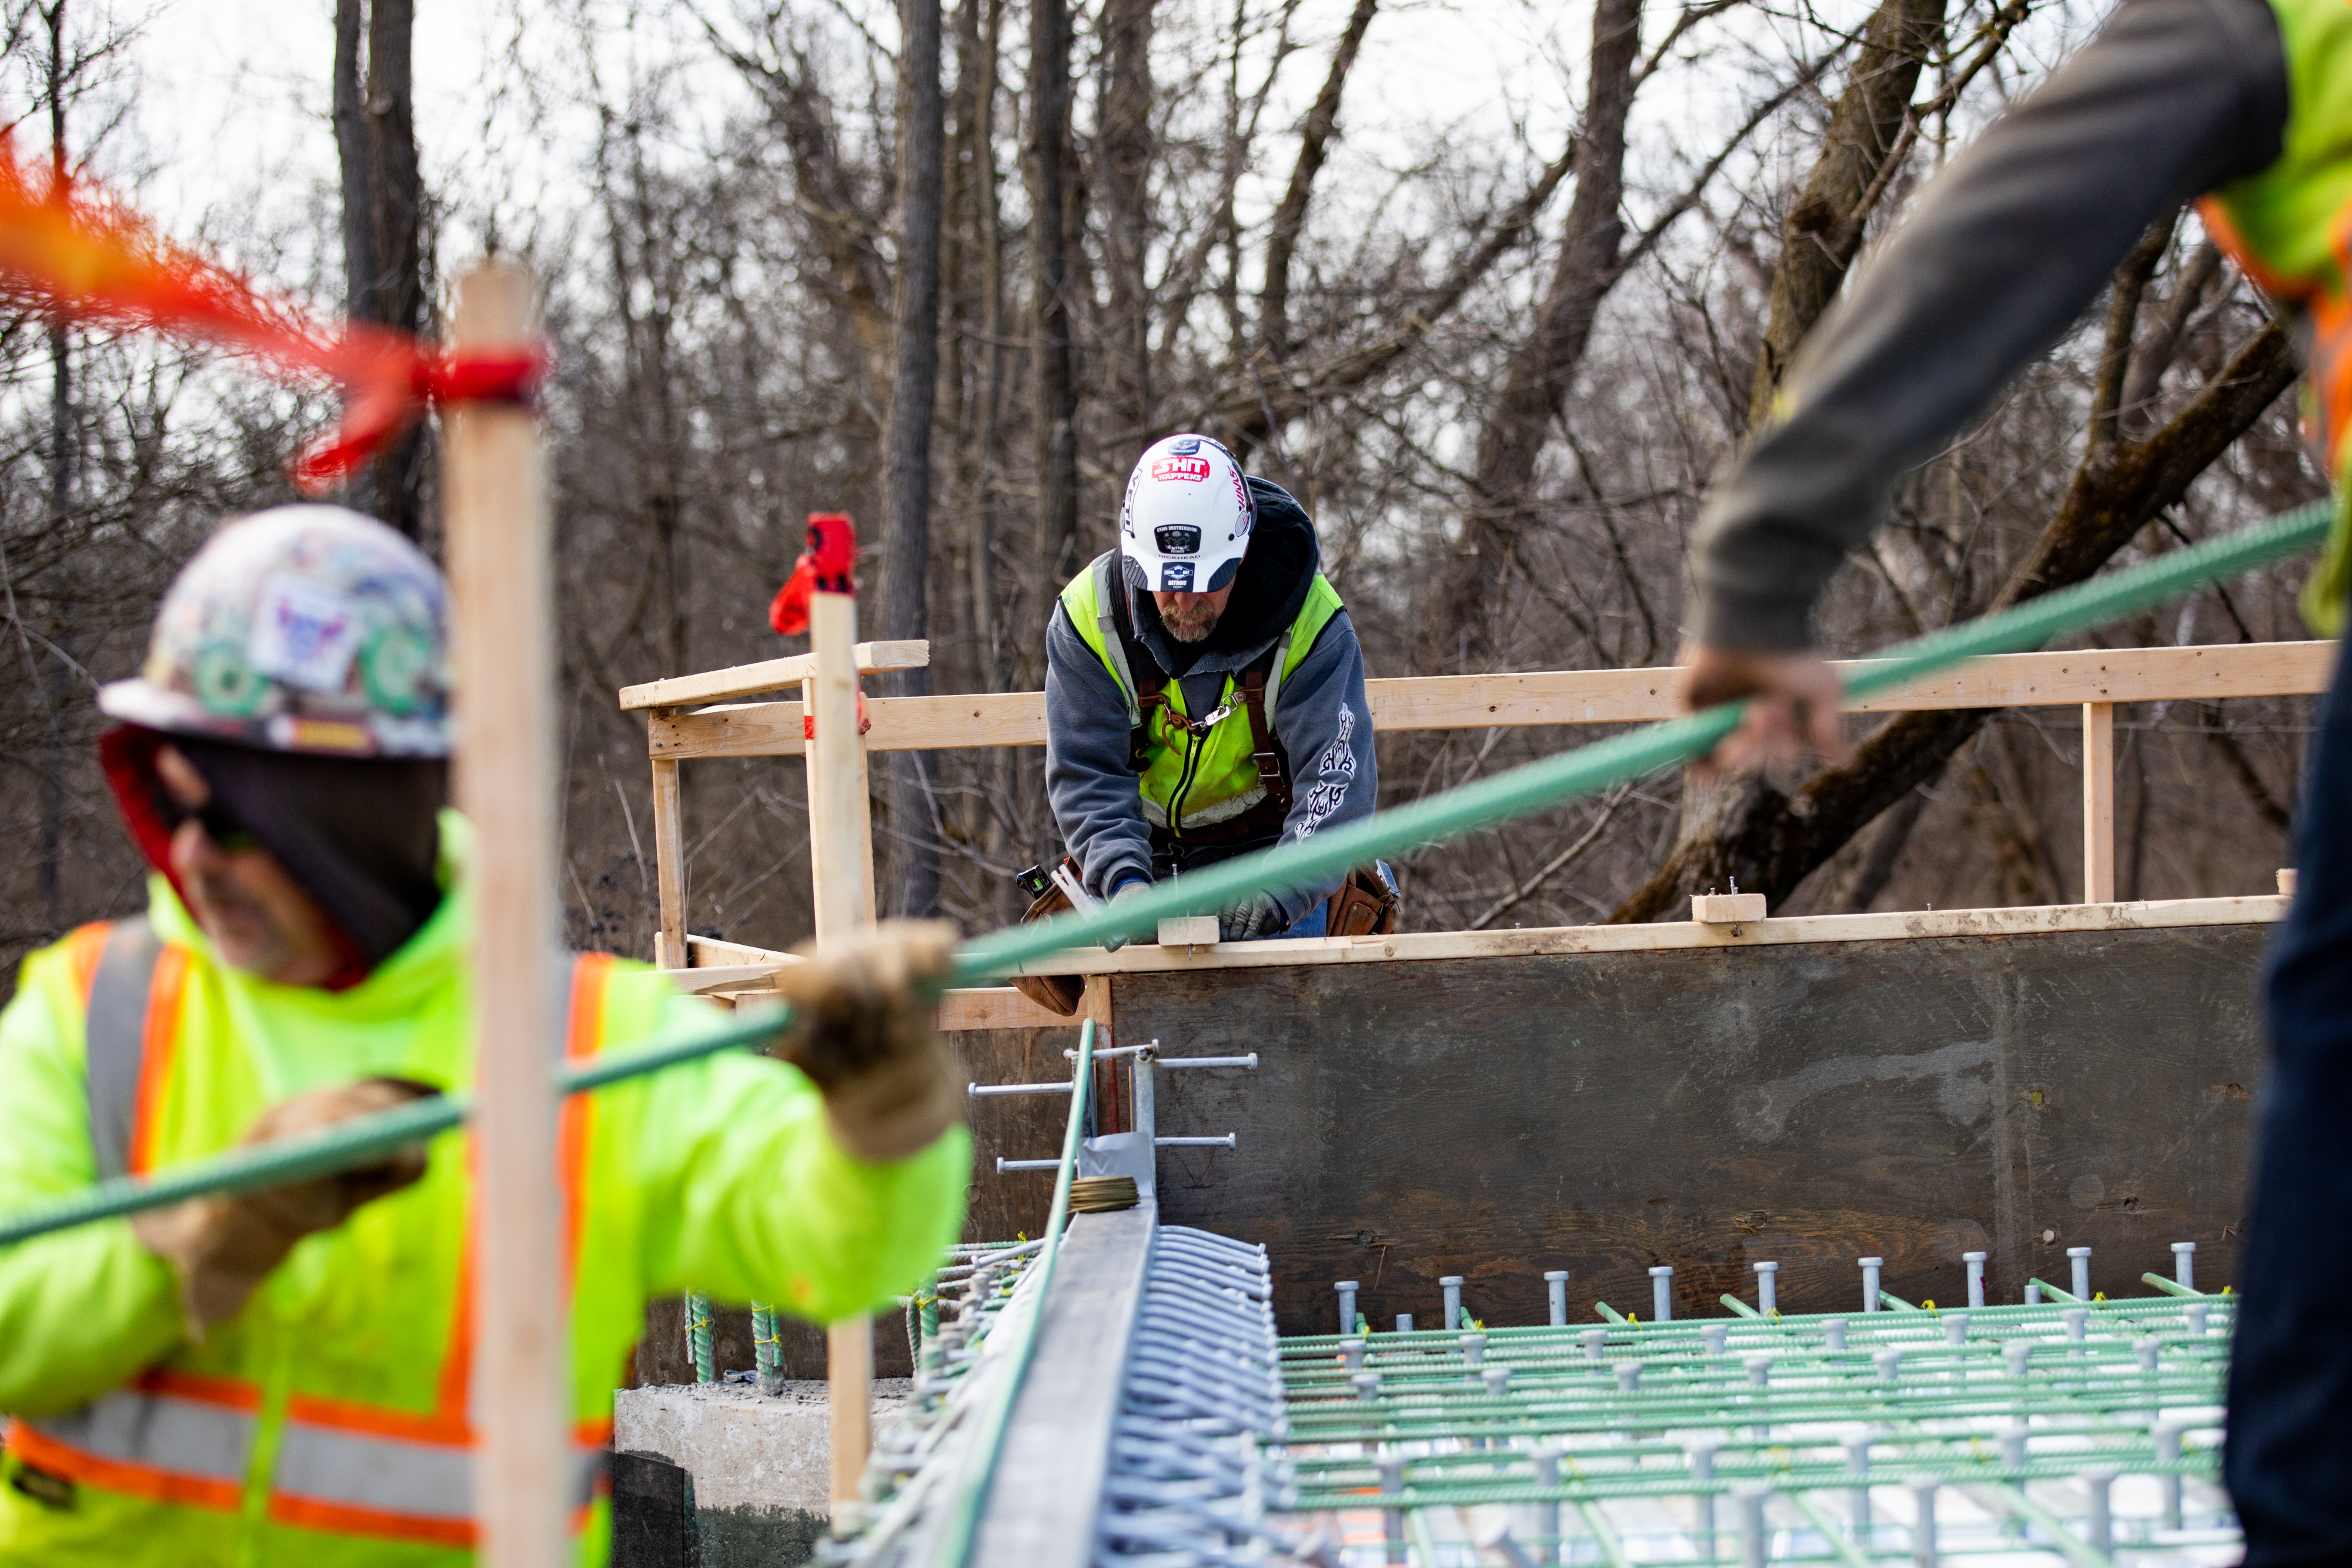 Contractors work on a bridge in Armada, Michigan